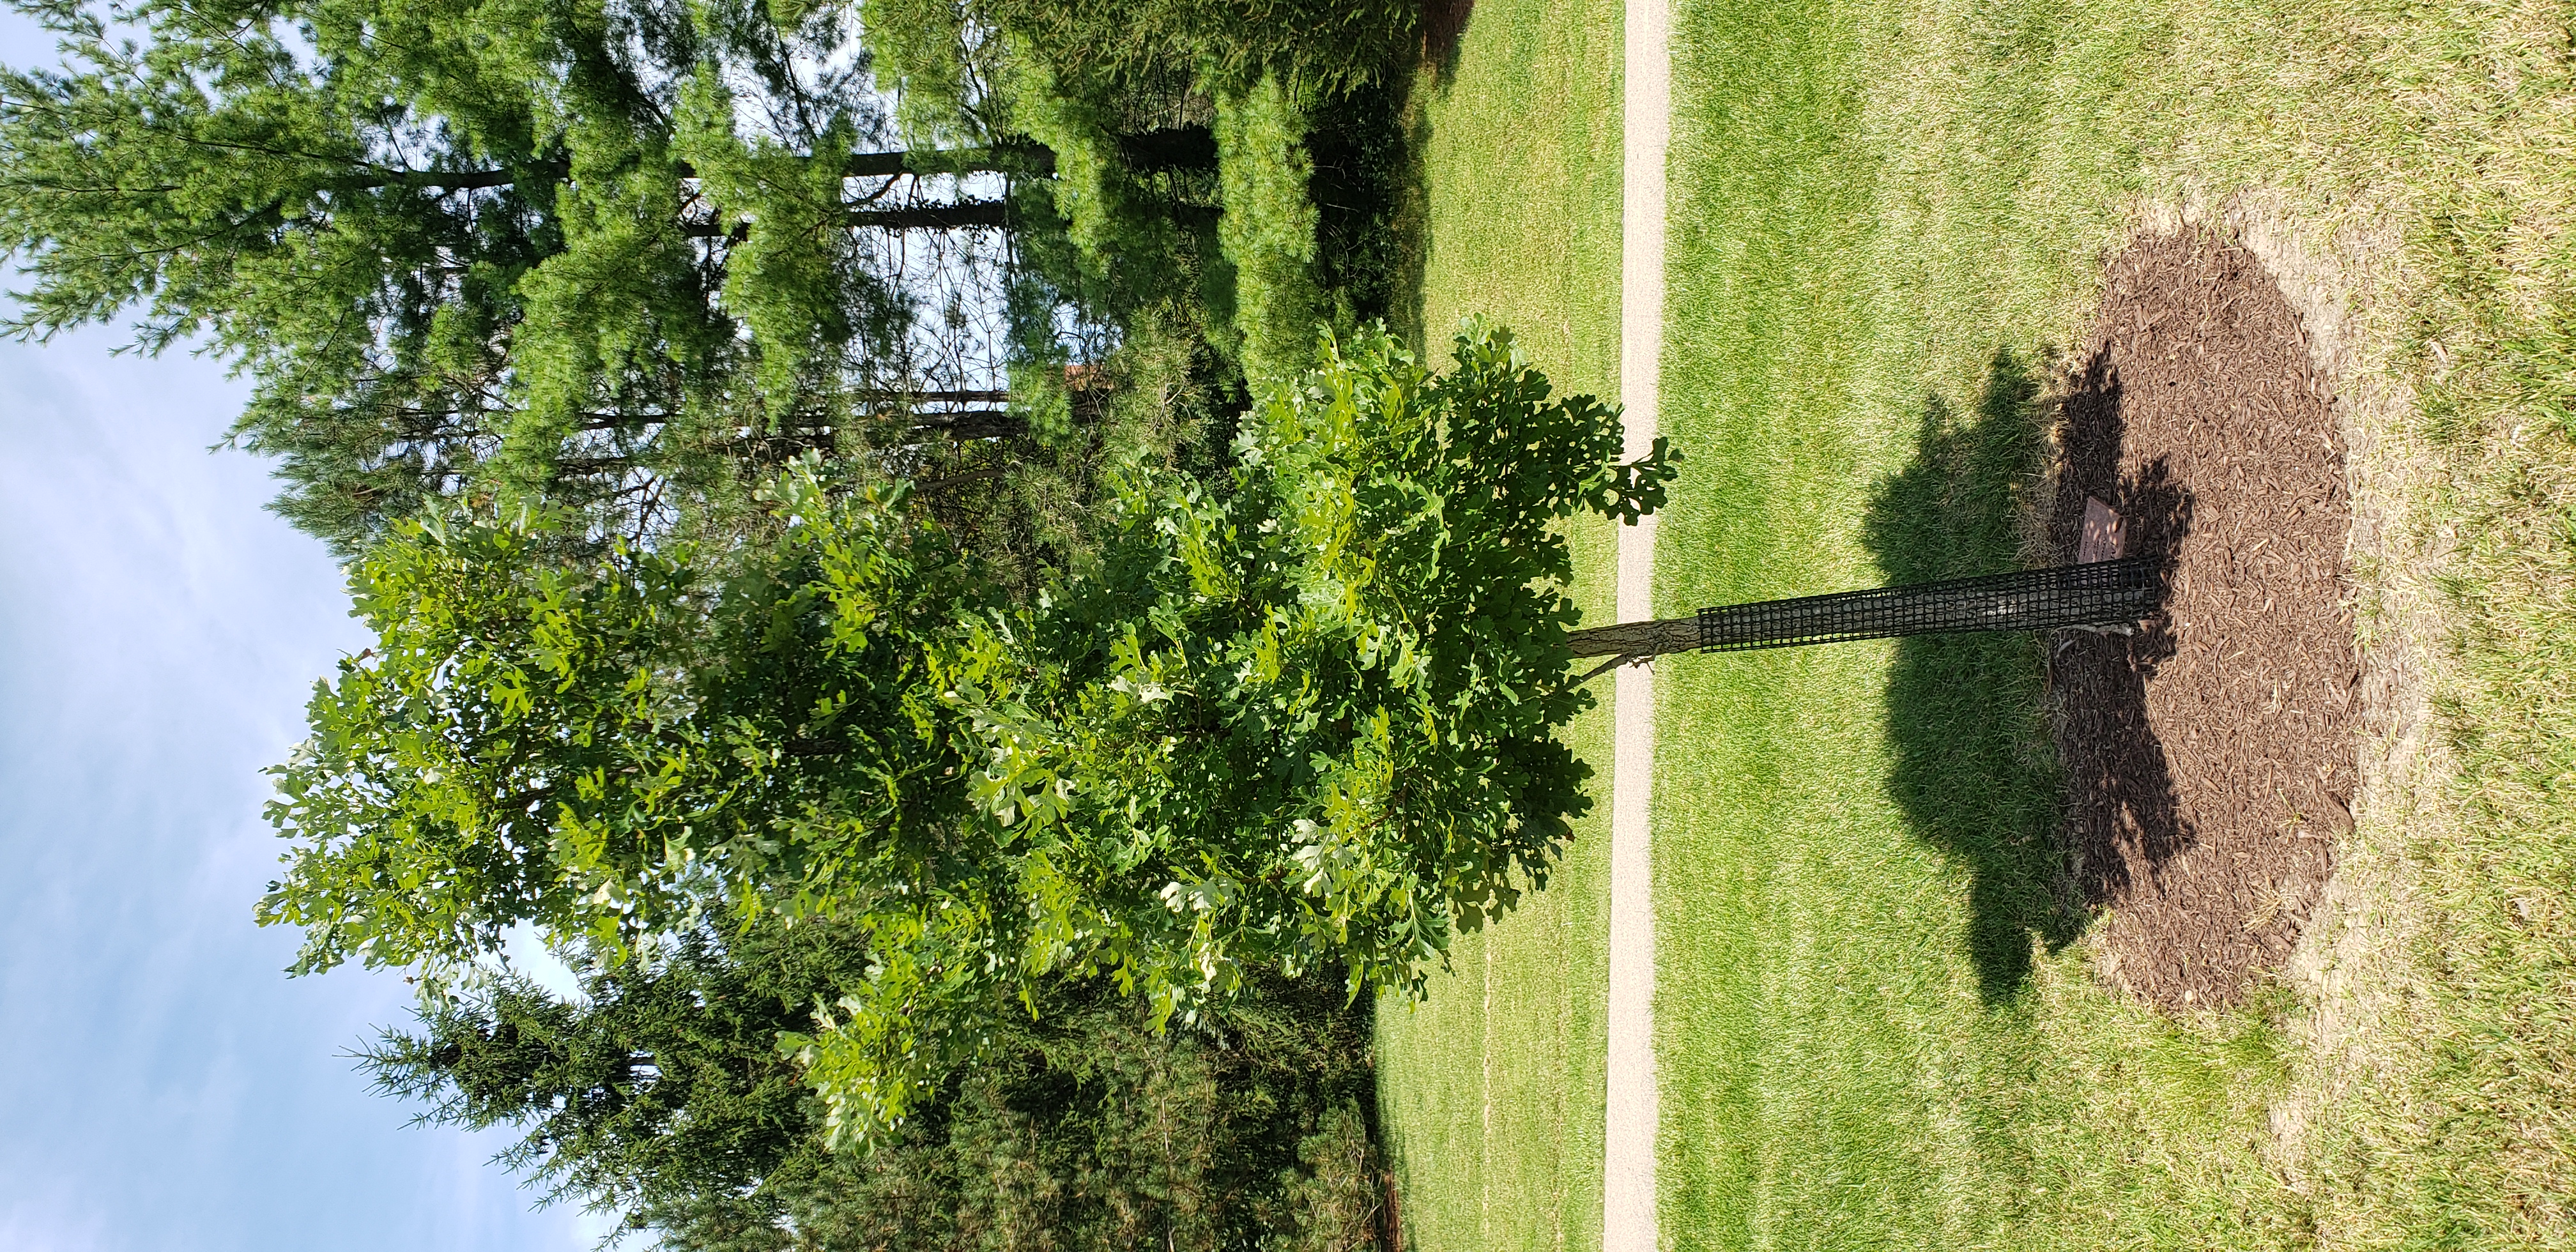 Quercus macrocarpa plantplacesimage20200809_130337.jpg